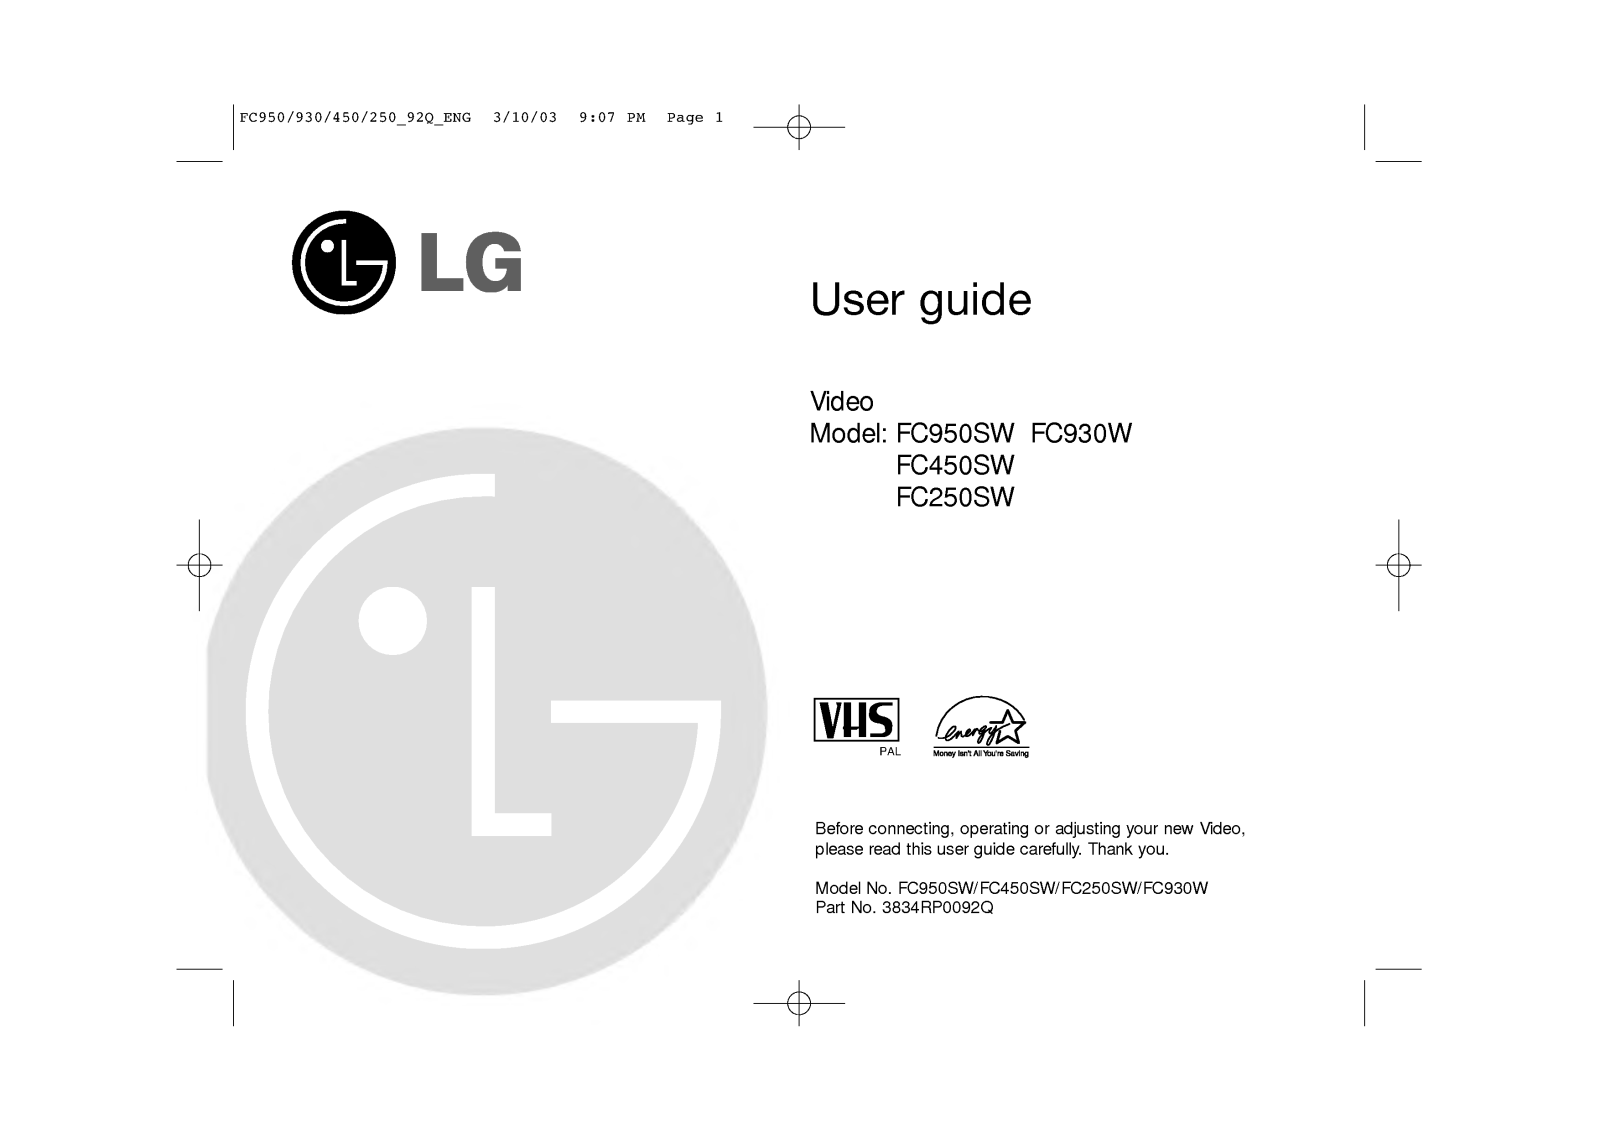 LG FC950SW, FC930W, FC250SW Manual